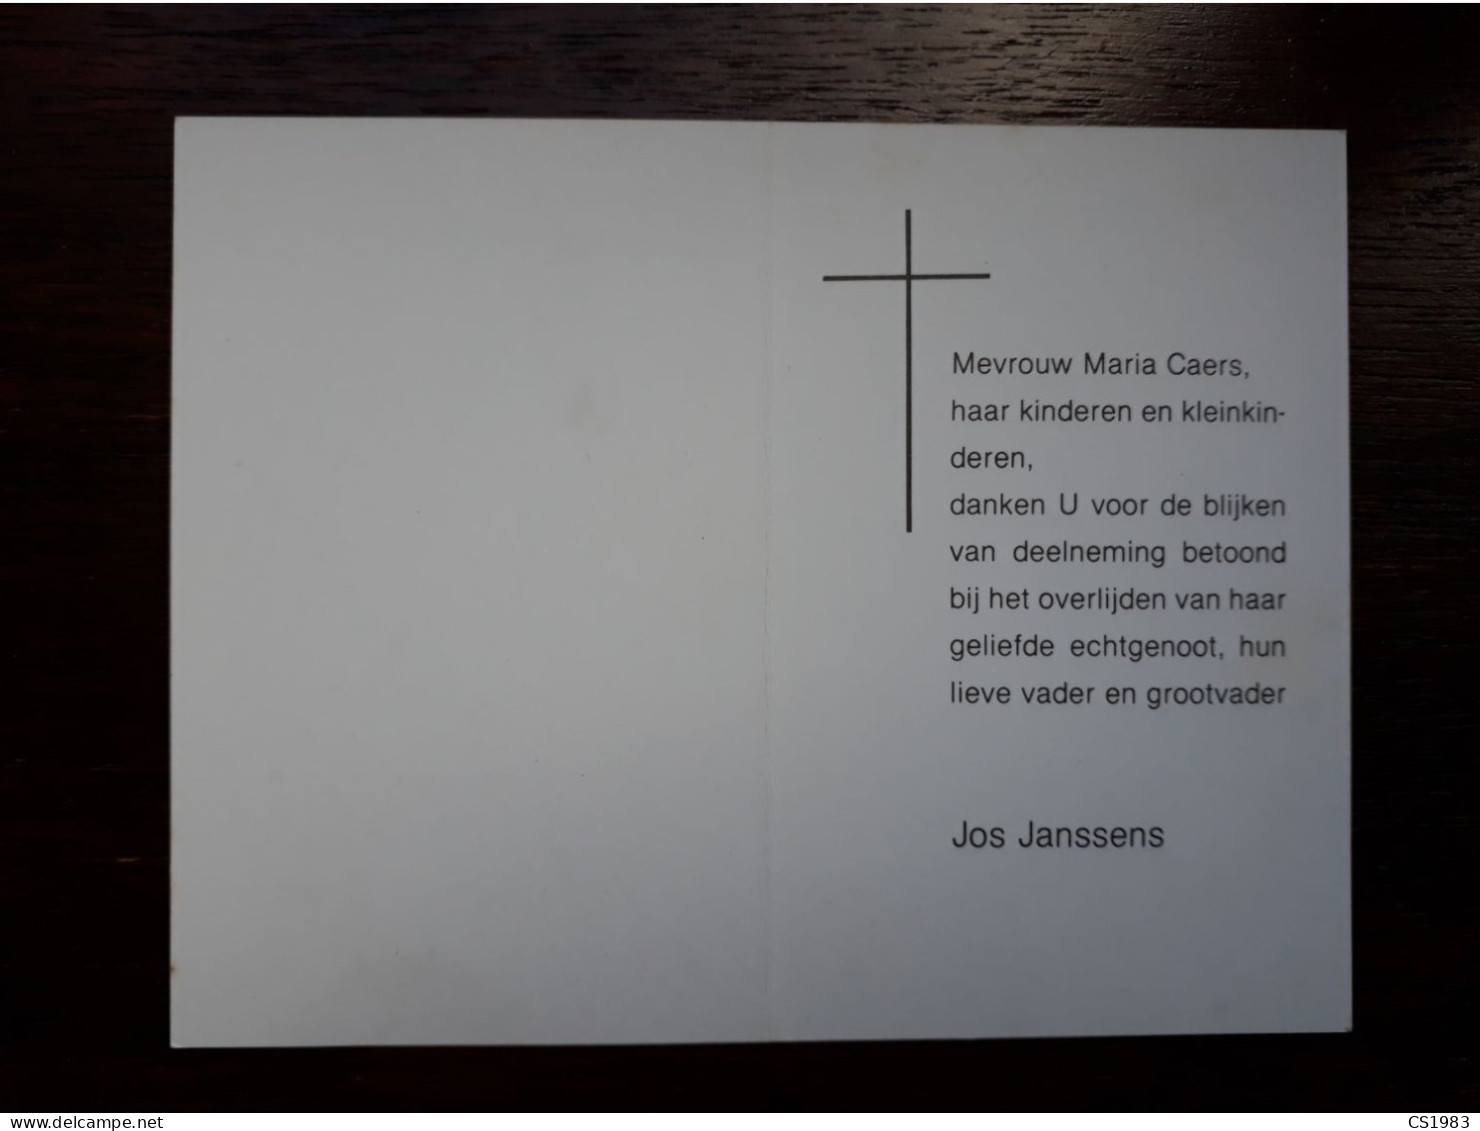 Jos Janssens X Maria Caers - Obituary Notices